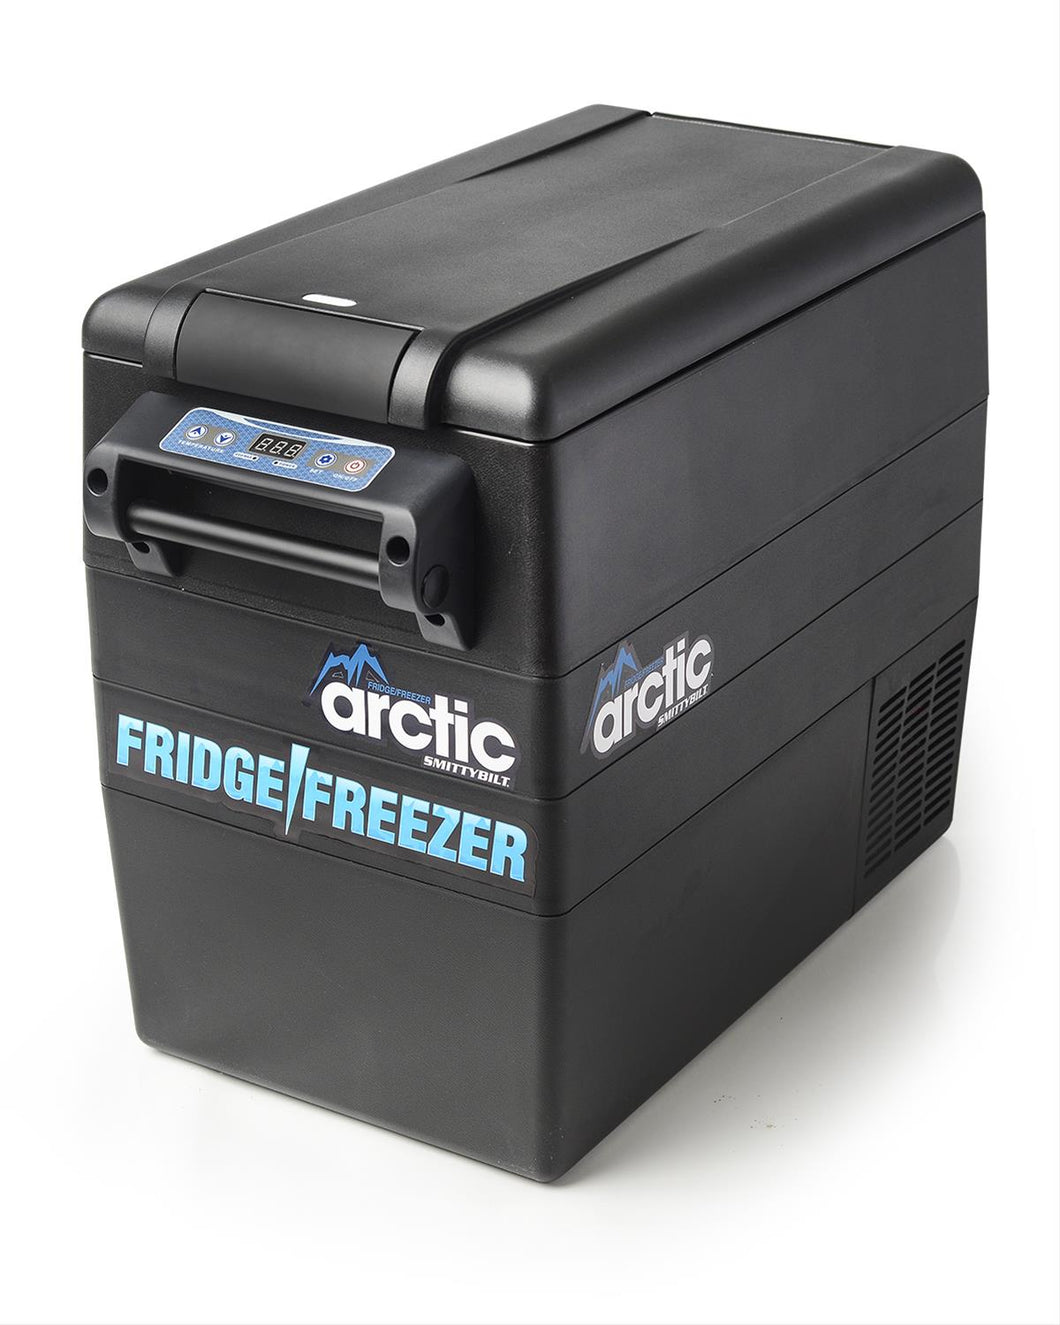 Smittybilt Arctic Fridge/Freezer (Charcoal) - 2789